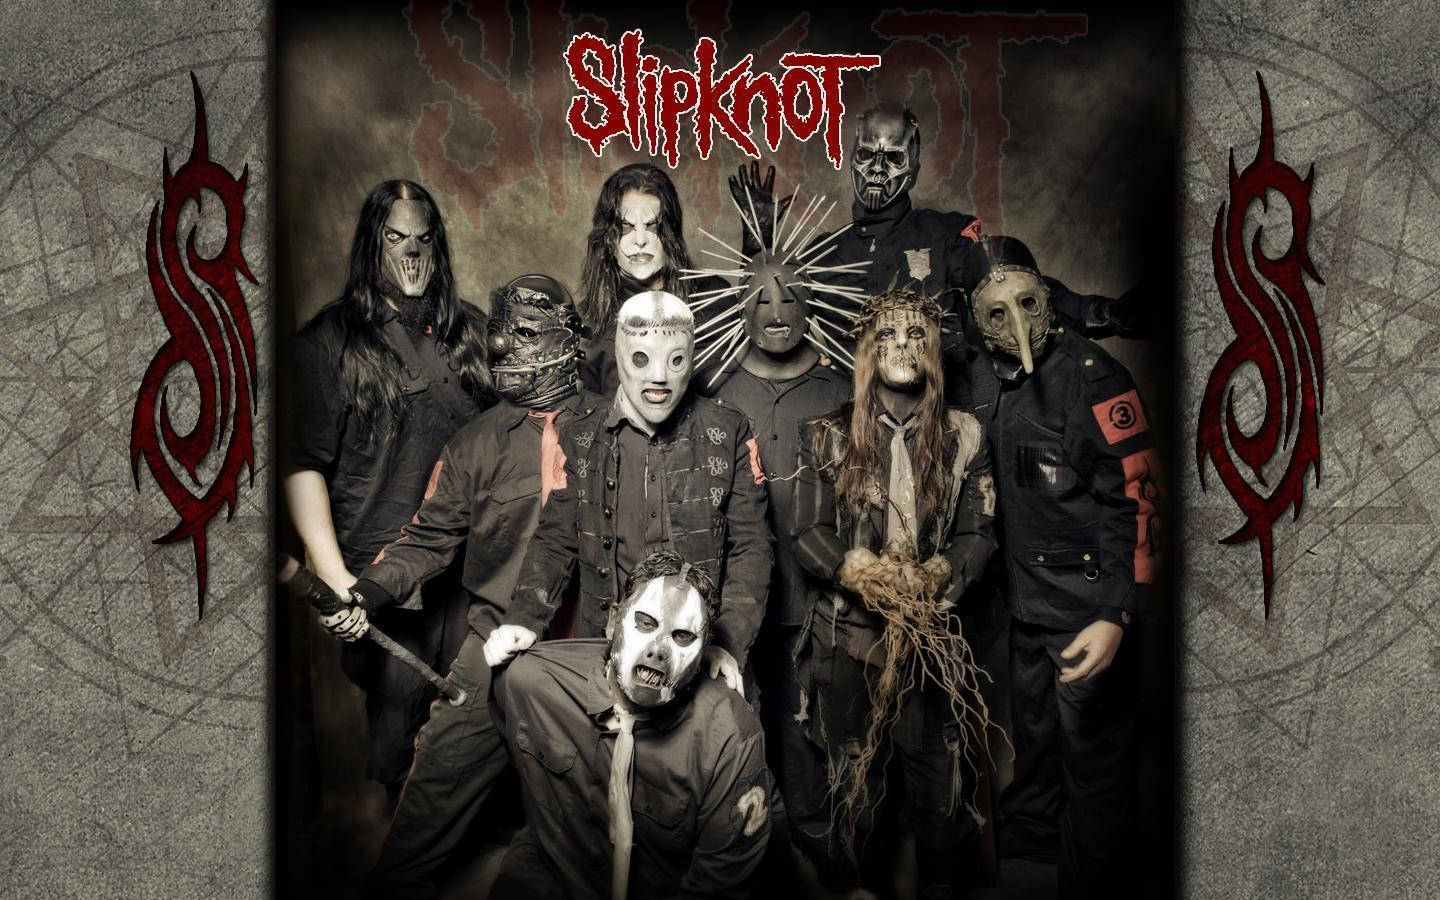 Classic-looking Slipknot Album Cover Background